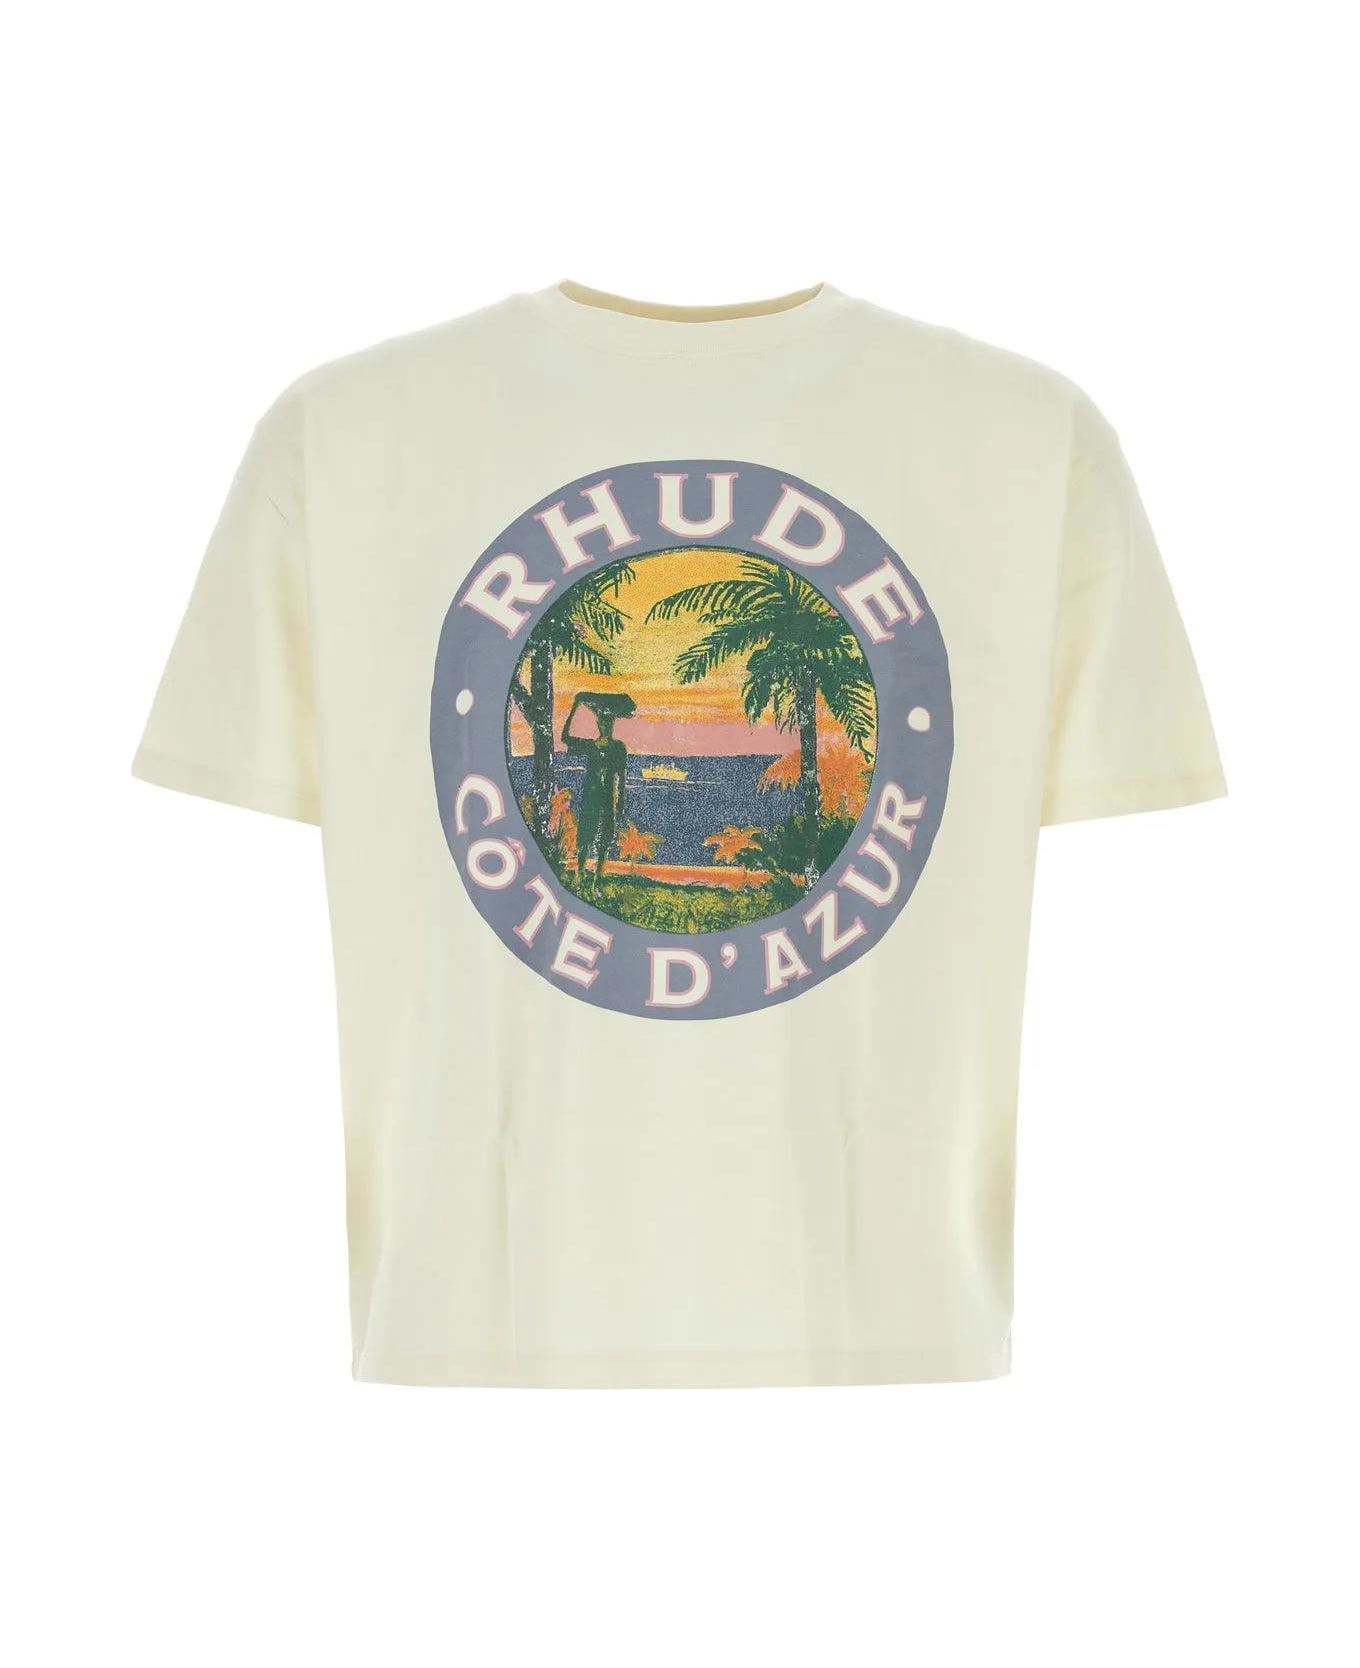 Rhude Sand Cotton Lago T-shirt - White